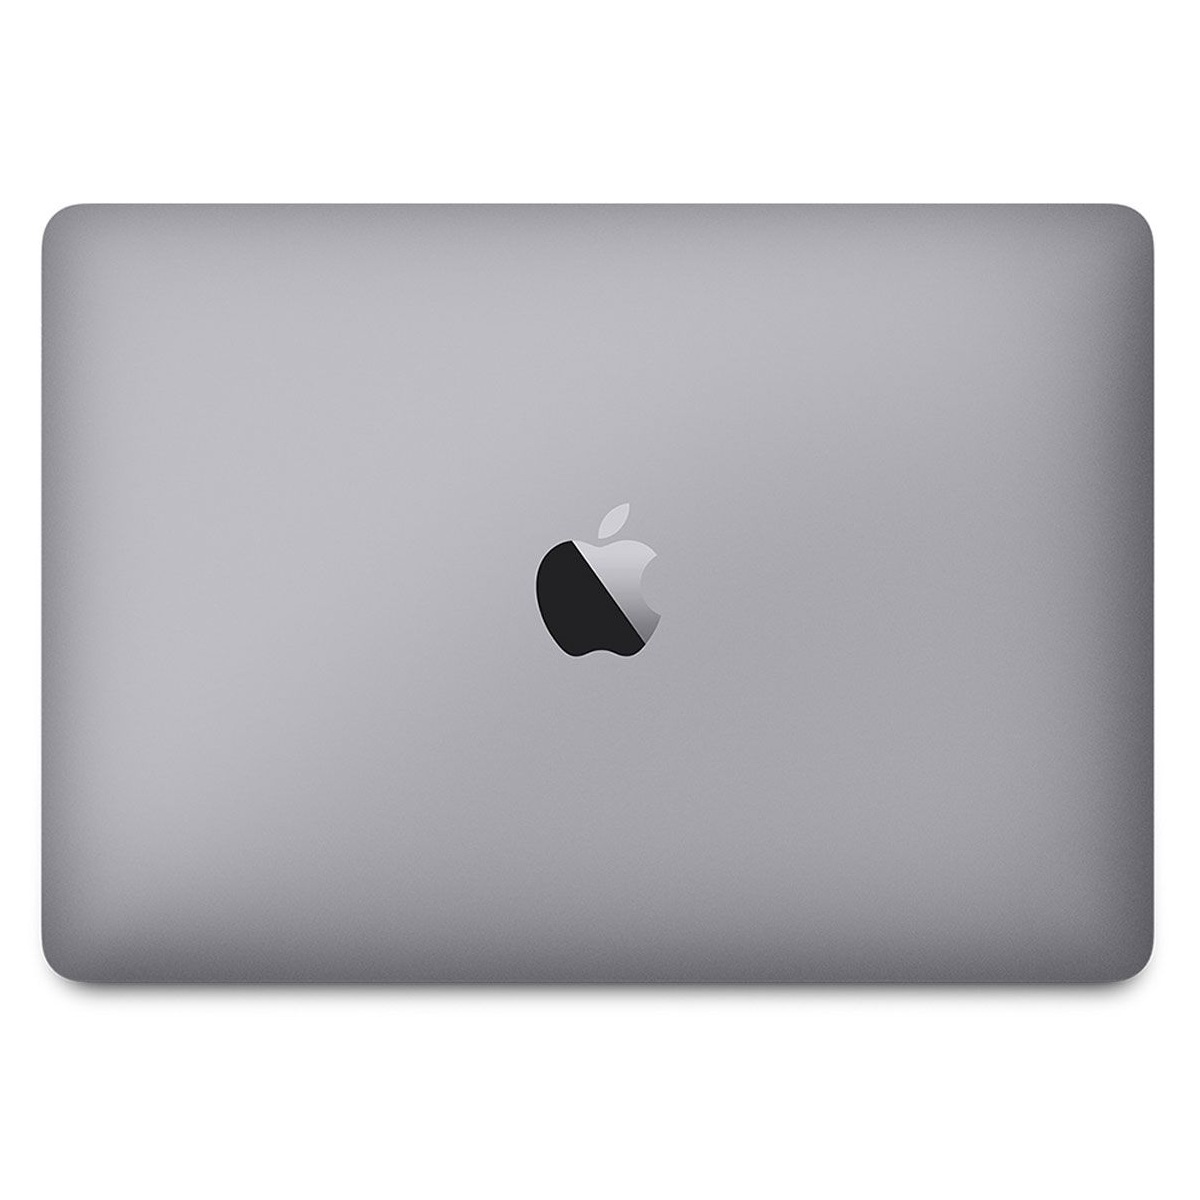 Ноутбук Apple MacBook 12 Early 2016 Space Grey (MLH72) (Intel Core m3 1100 MHz/12.0/2304x1440/8.0Gb/256Gb SSD/DVD нет/Intel HD Graphics 515/Wi-Fi/Bluetooth/MacOS X)